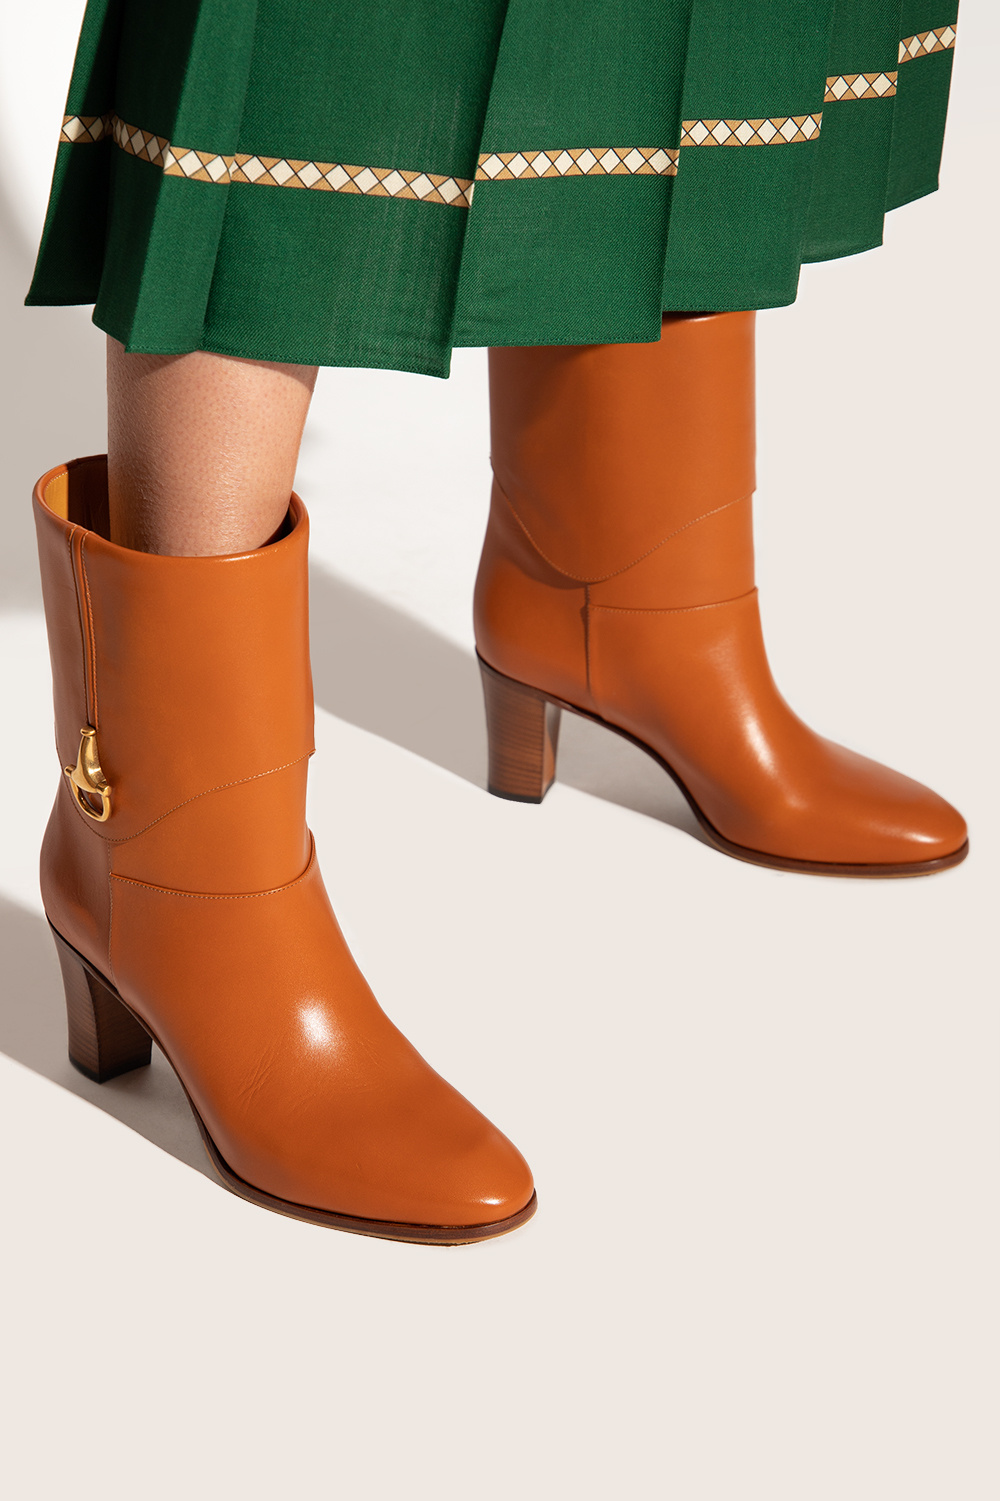 Gucci ‘Elizabeth’ heeled ankle accessorises